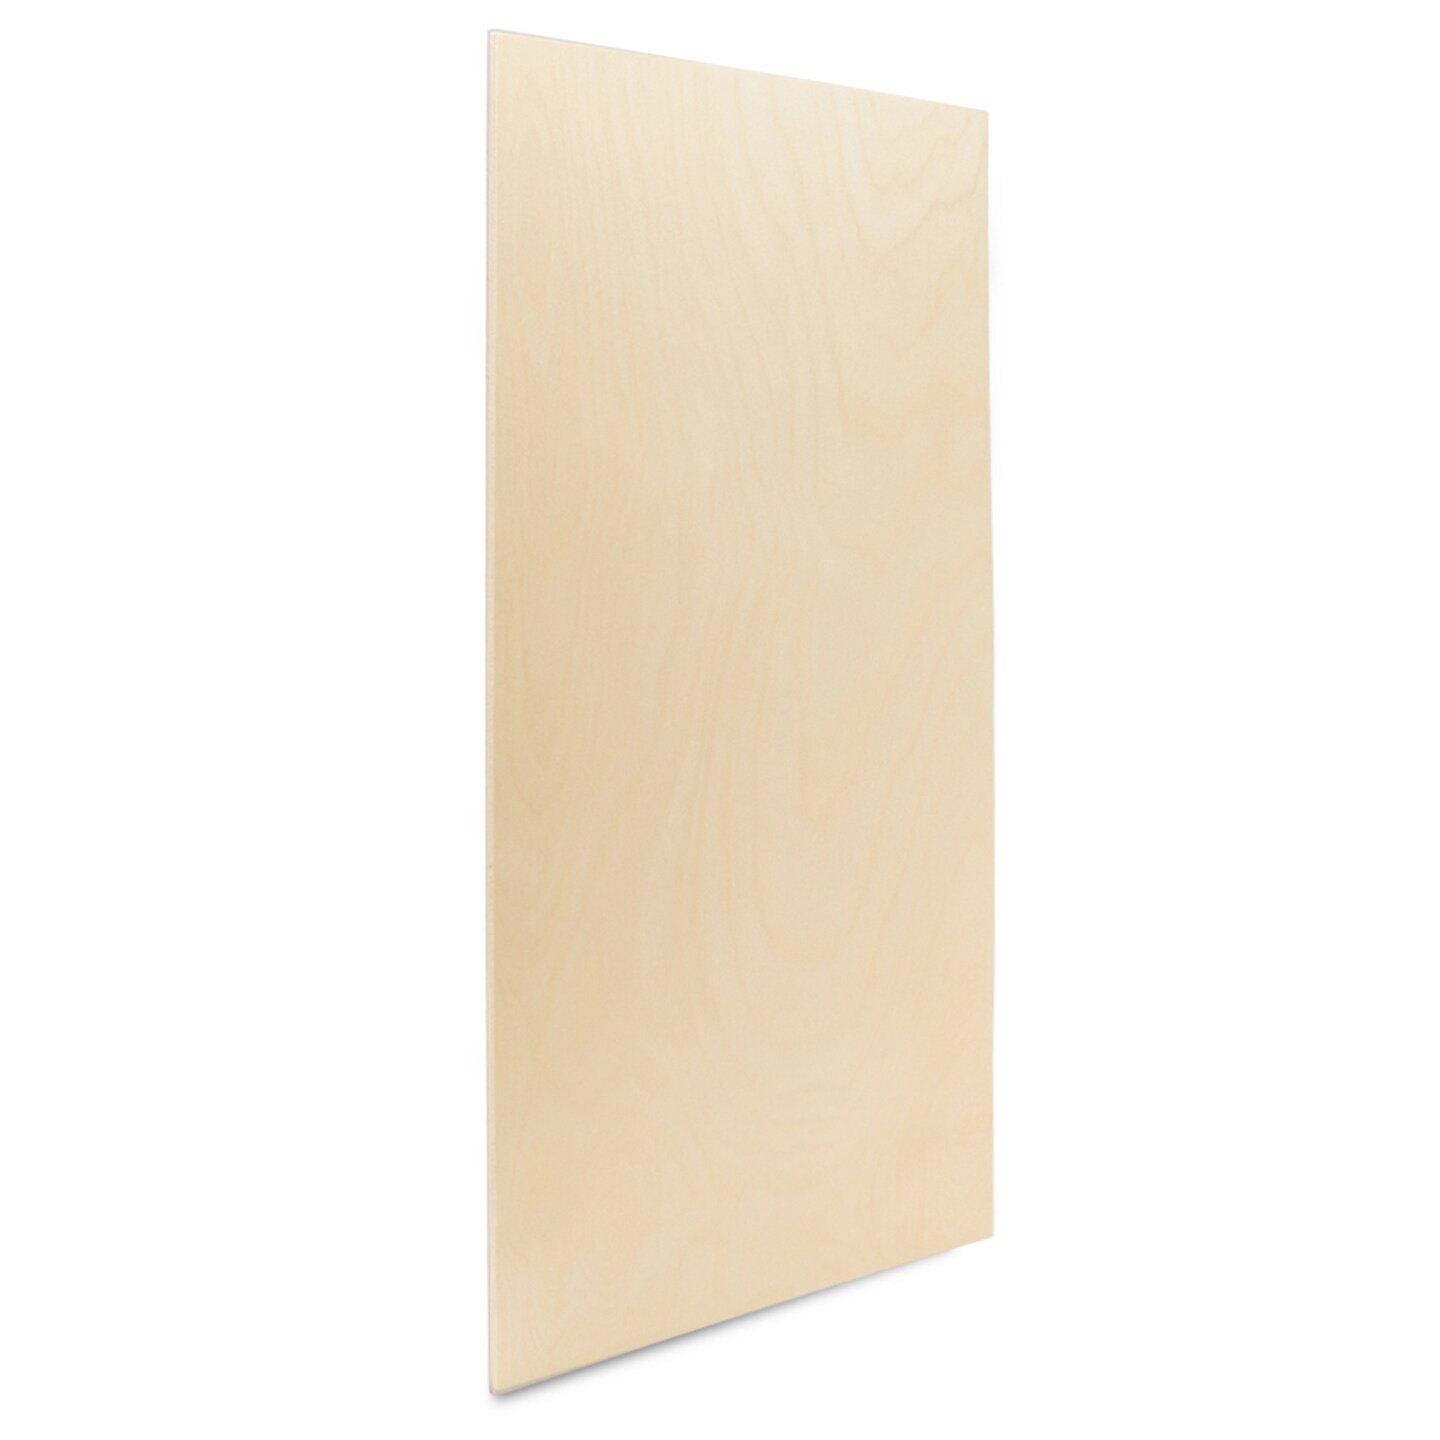 1/8 x 12 x 24 Baltic Birch B/BB Plywood Sheets